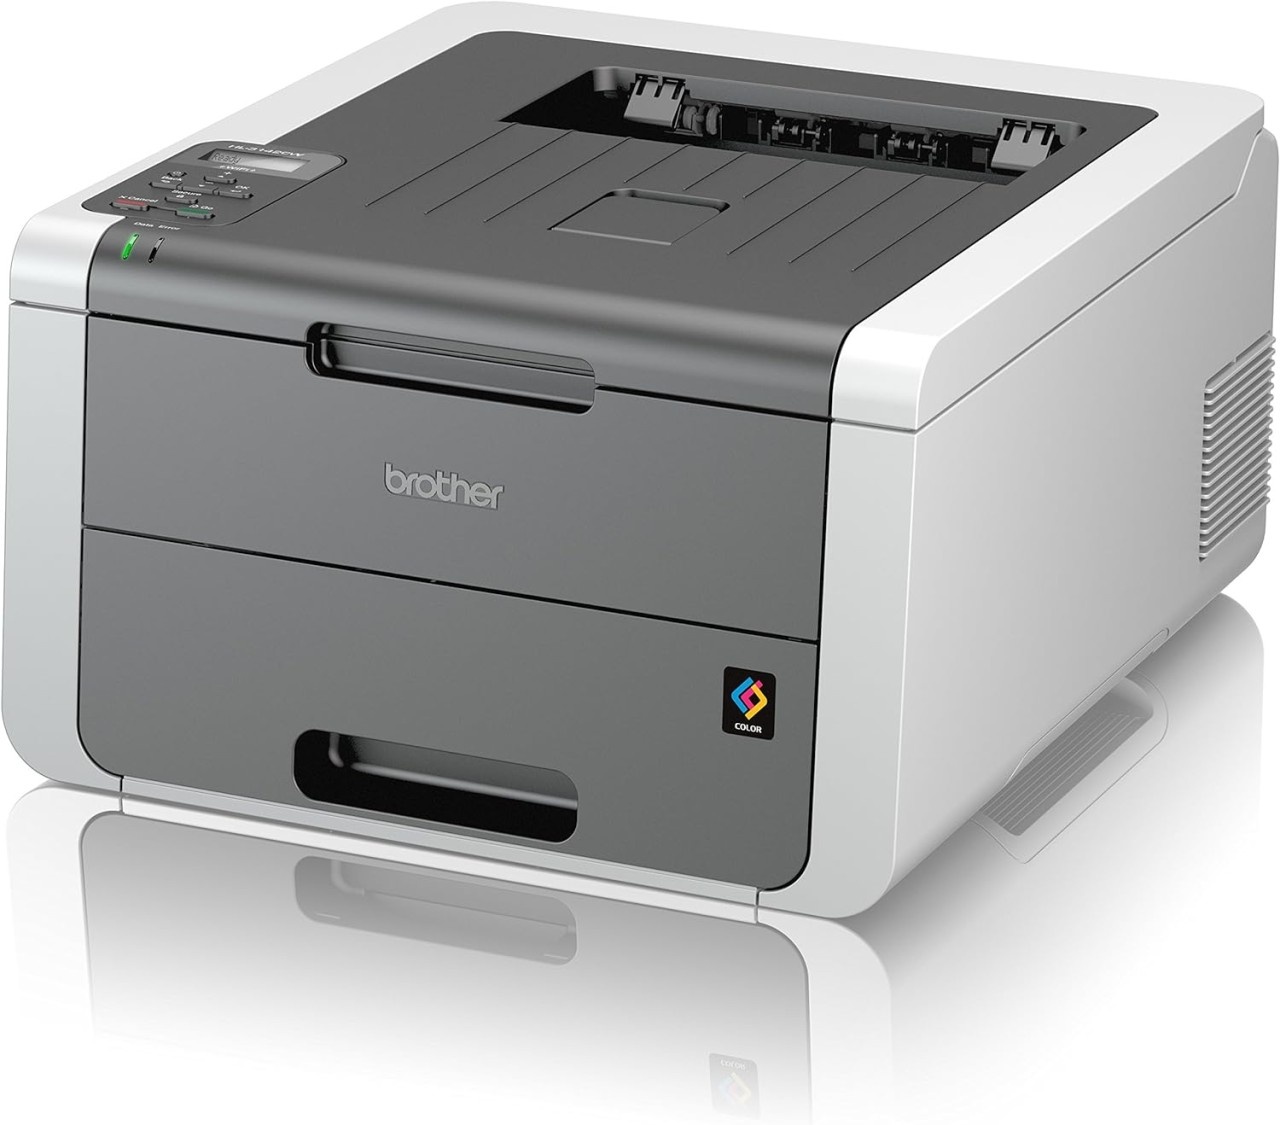 Brother HL-3142CW Laserdrucker Farbdrucker Drucker 2400x600dpi Wi-fi WLAN A4 ...